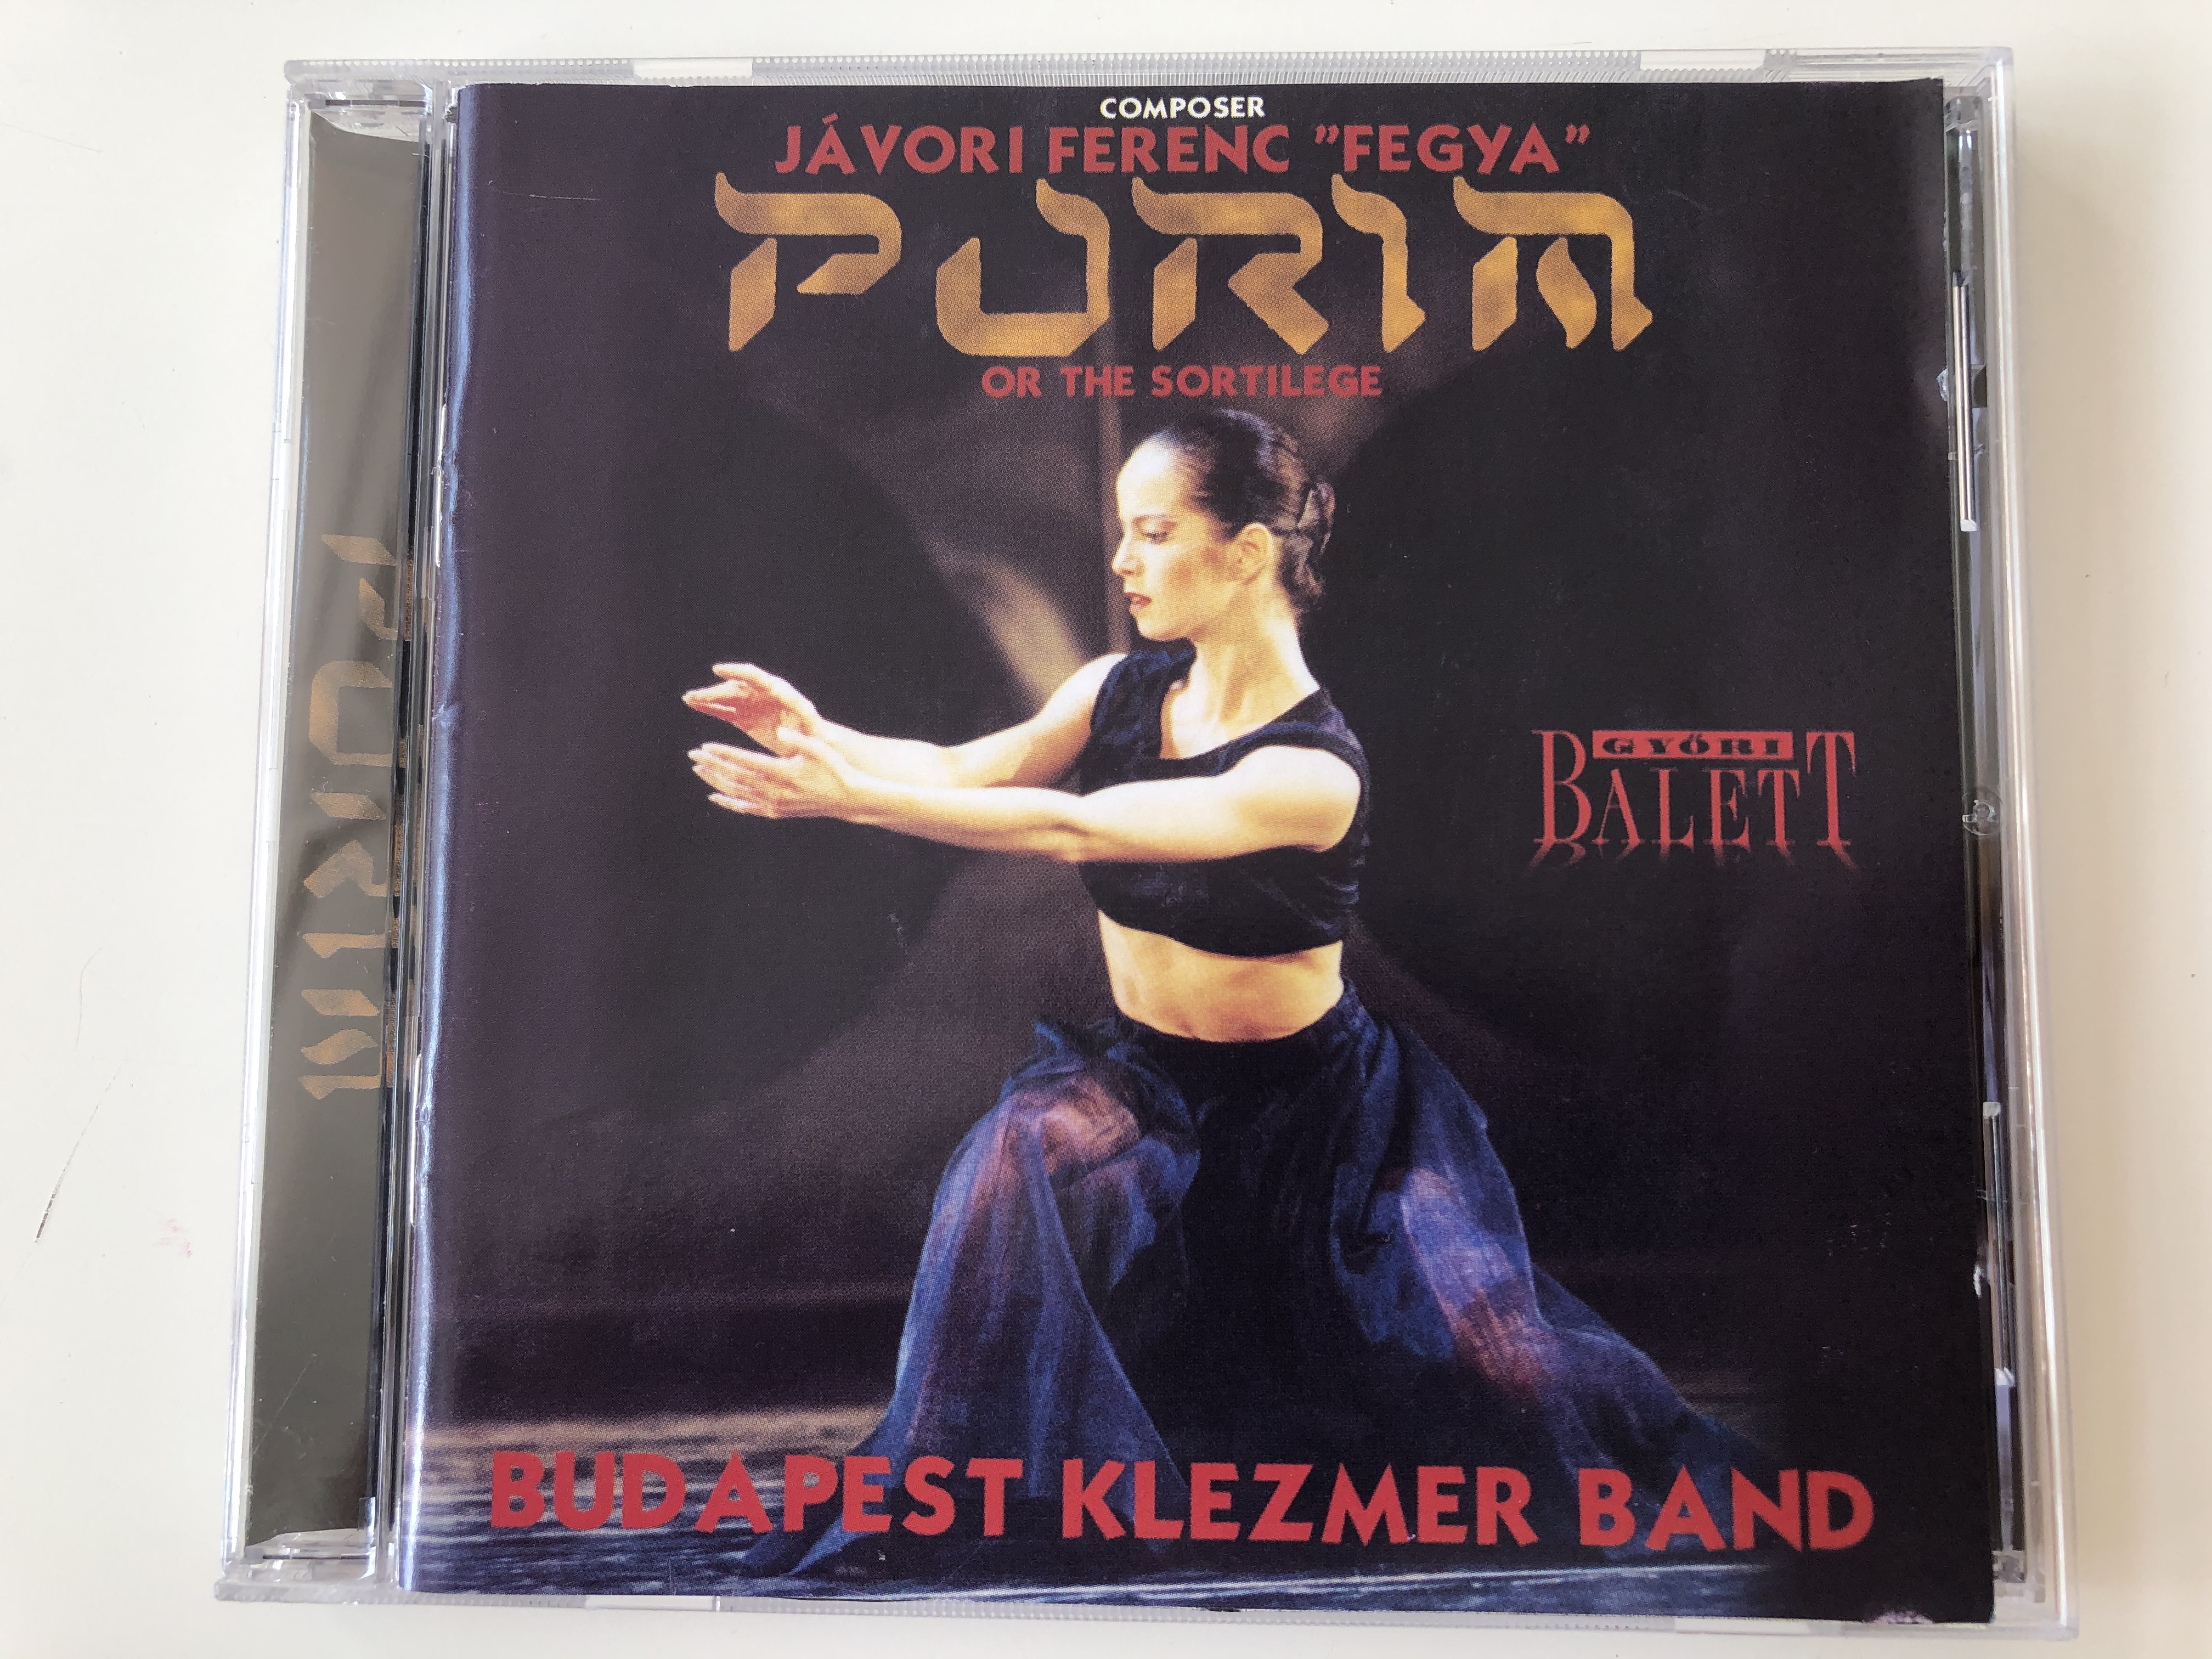 composer-j-vori-ferenc-fegya-purim-or-the-sortilege-budapest-klezmer-band-klezmer-music-ltd.-audio-cd-1999-bkb-991-1-.jpg